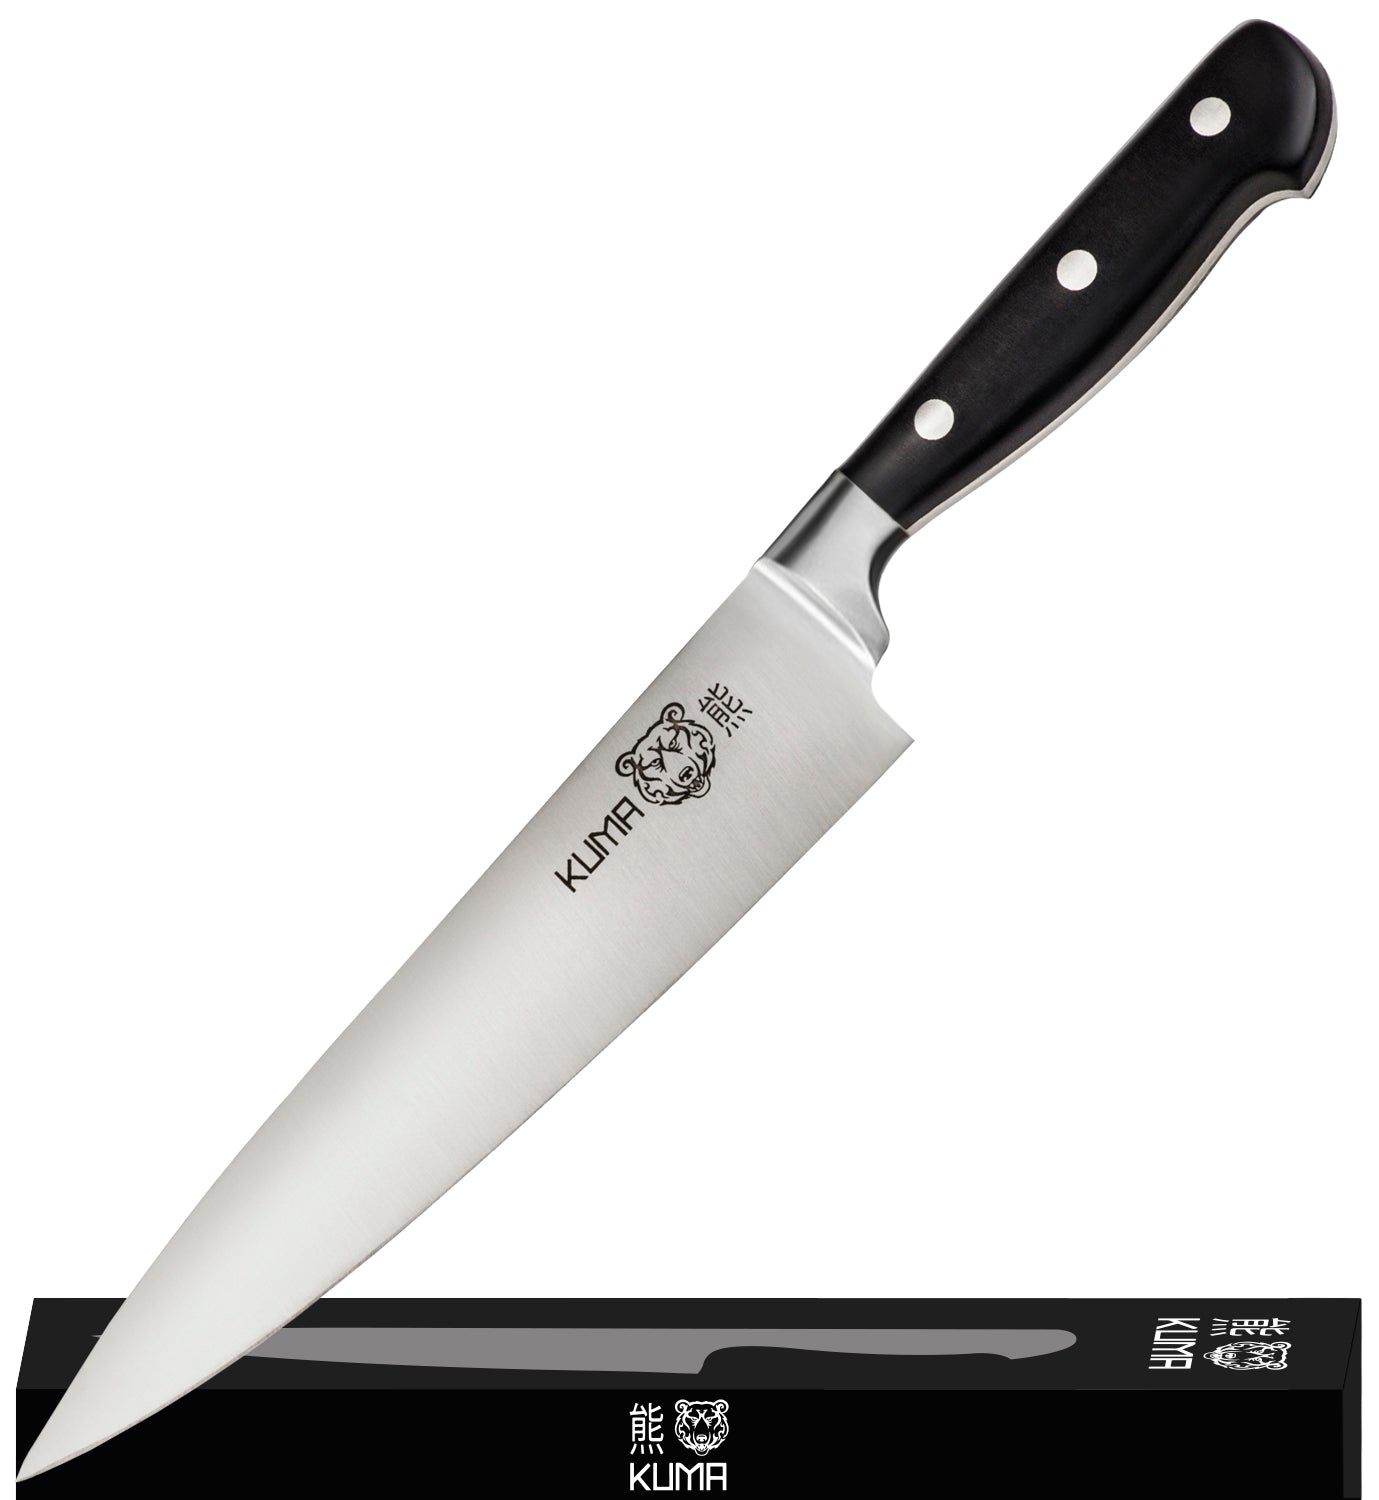 OLULU 8 inch Chef Knife, Razor Sharp Kitchen Knife with Protective Knife  Sheath, Razor Sharp Slicing Knife with Ergonomic Handle, German Stainless